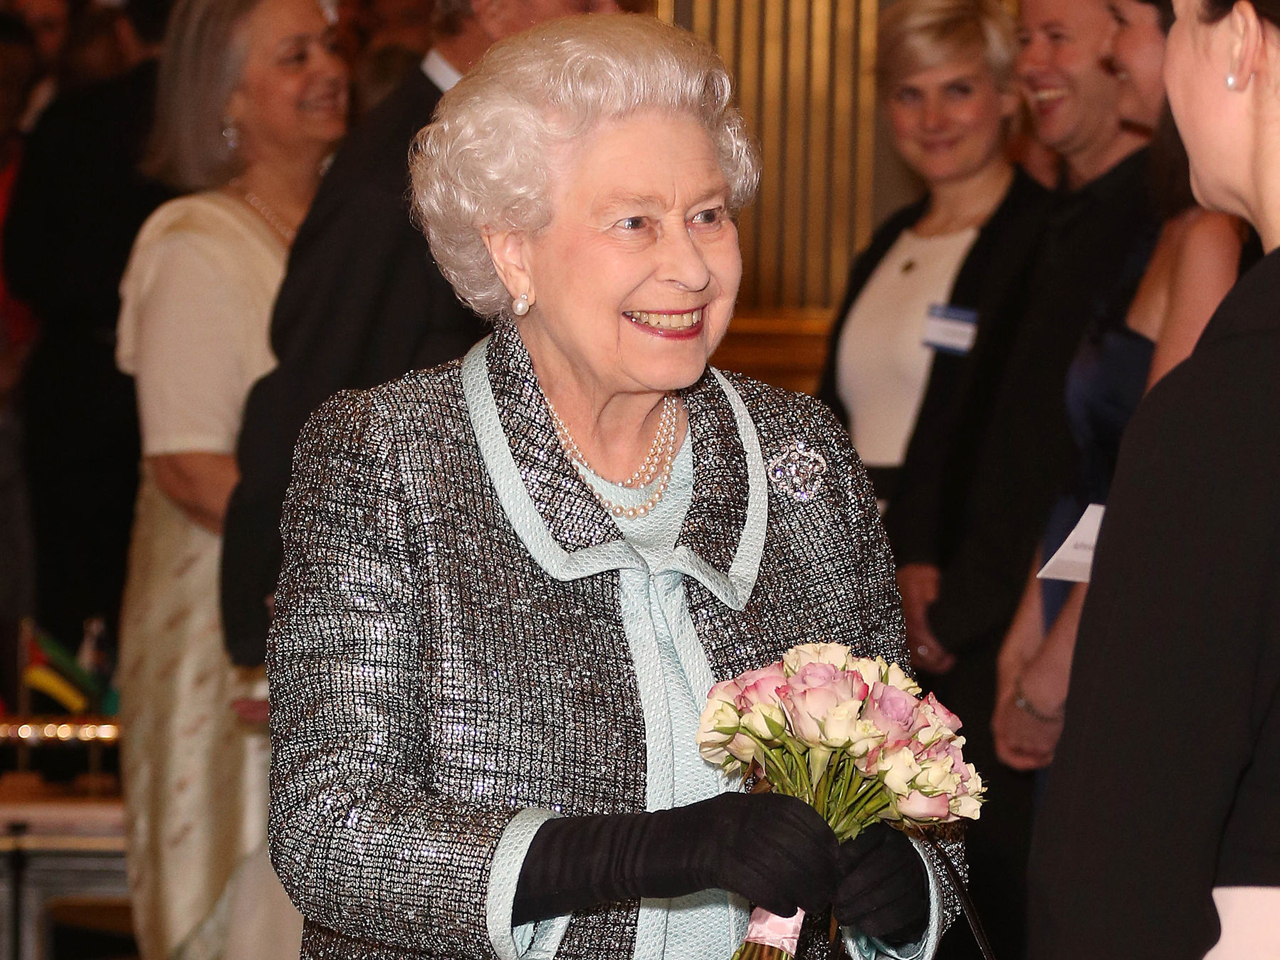 Queen Elizabeth II celebrates Commonwealth Day after illness - CBS News